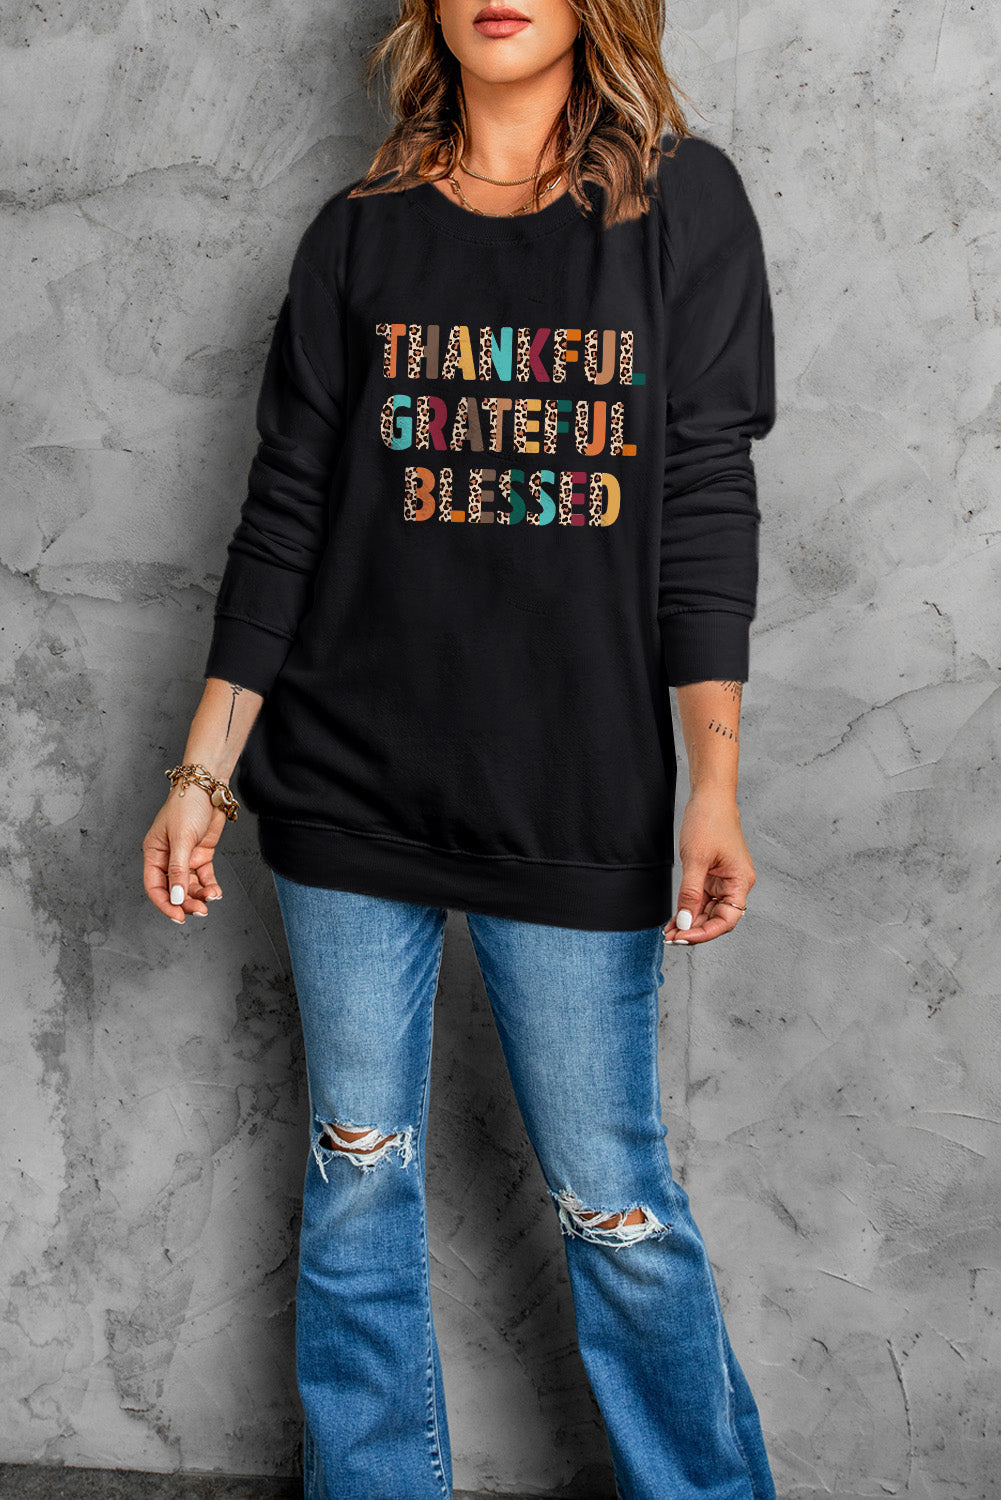 Black Leopard TANKFUL GRATEFUL BLESSED Graphic Sweatshirt Graphic Sweatshirts JT's Designer Fashion